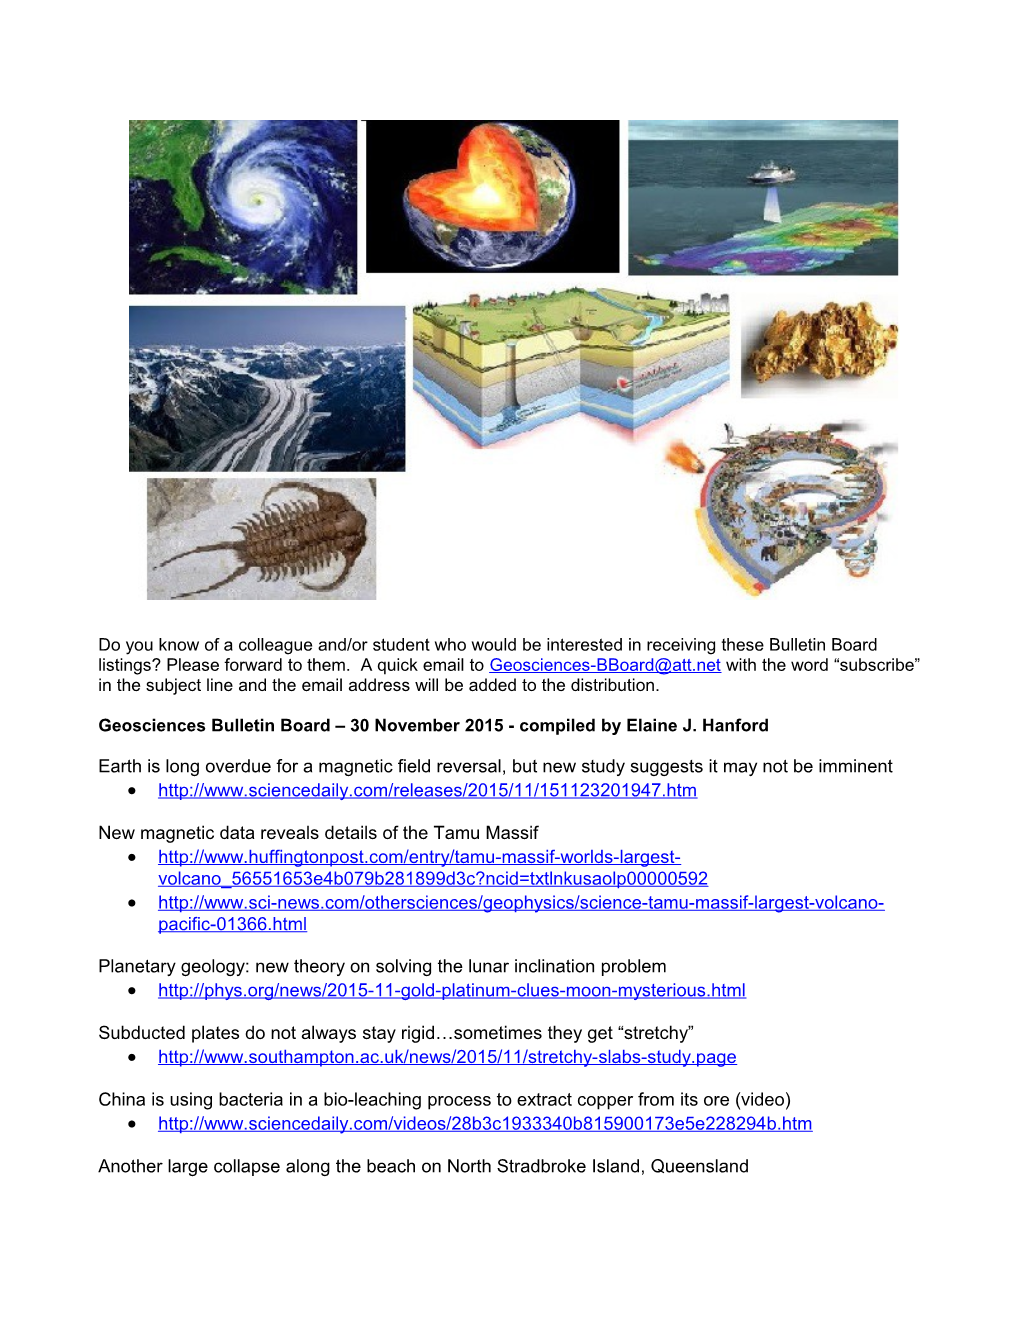 Geosciences Bulletin Board 30 November 2015- Compiled by Elaine J. Hanford